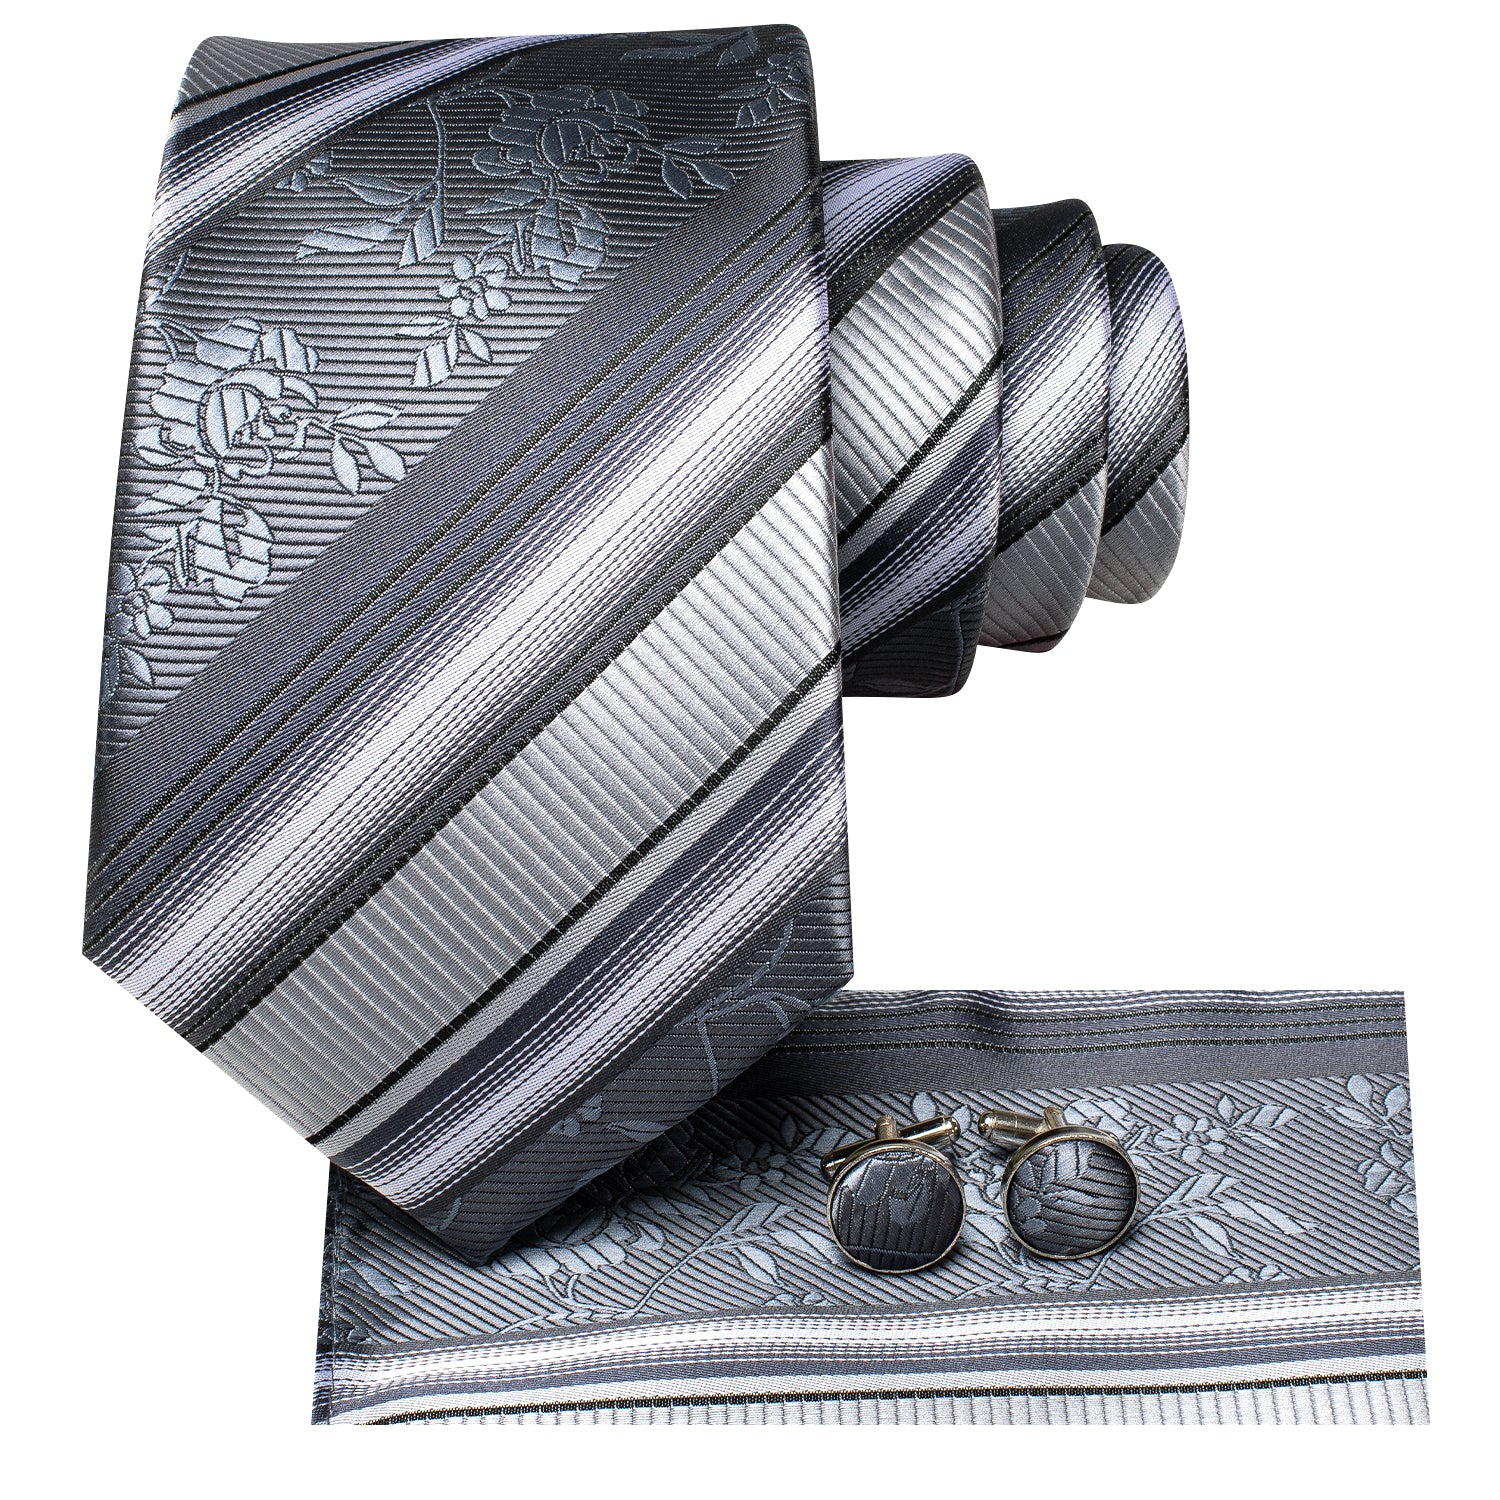 New Grey Strip Floral Tie Pocket Square Cufflinks Set